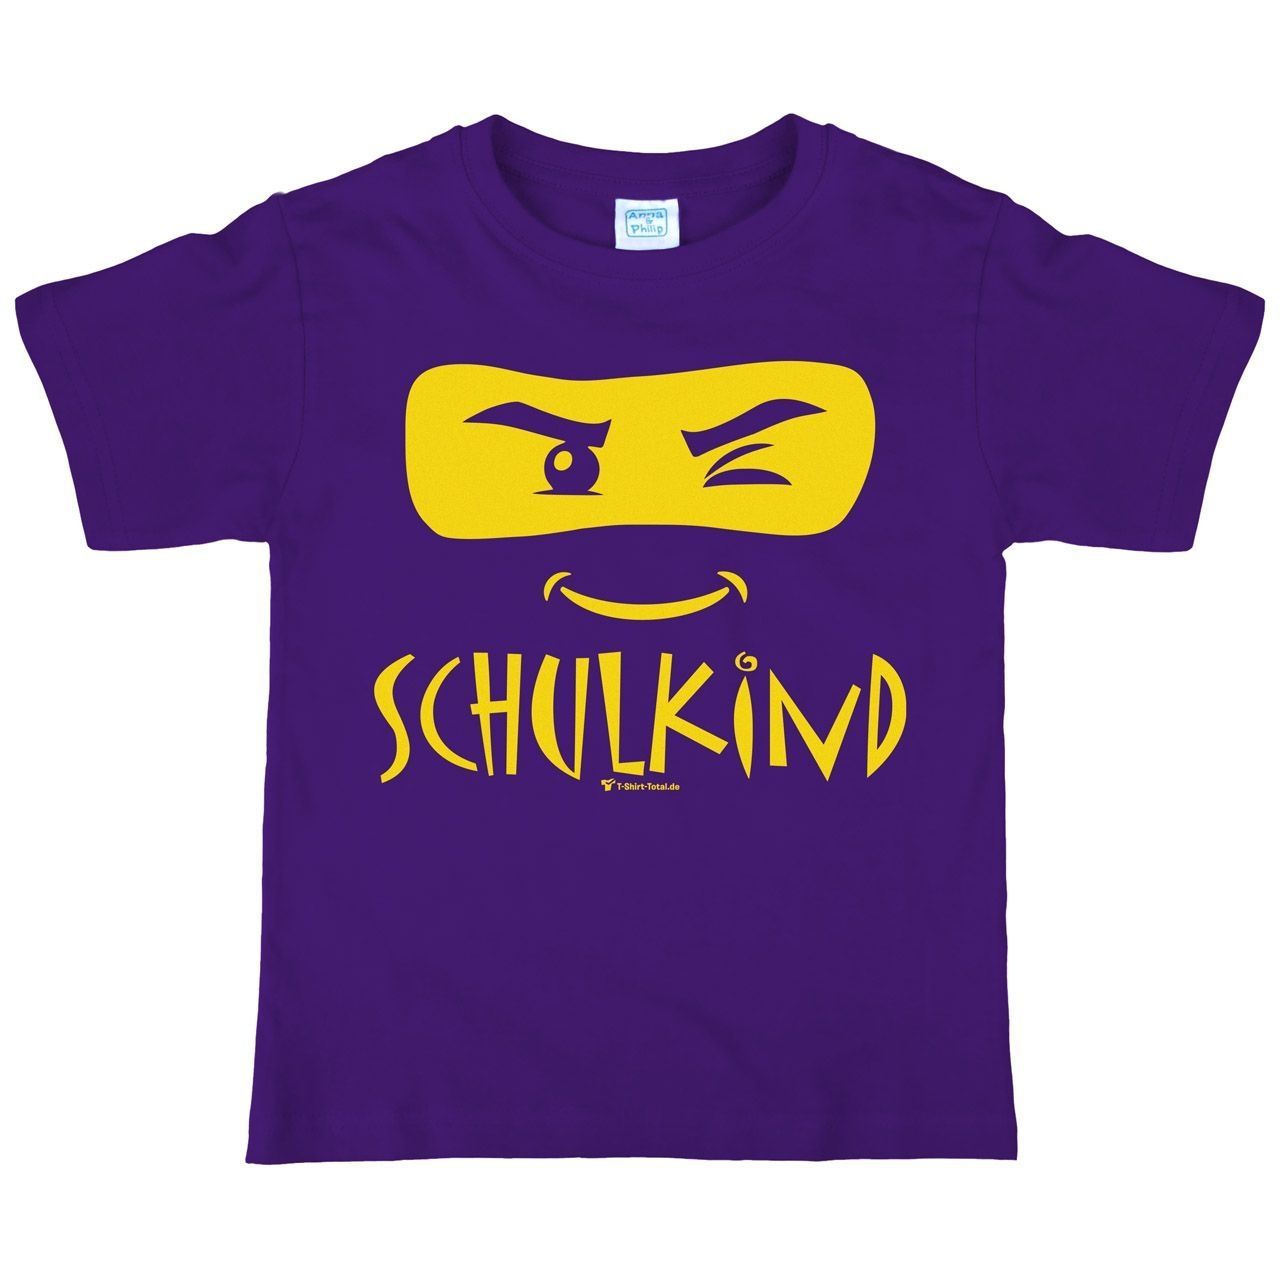 Schulkind Maske Kinder T-Shirt lila 122 / 128